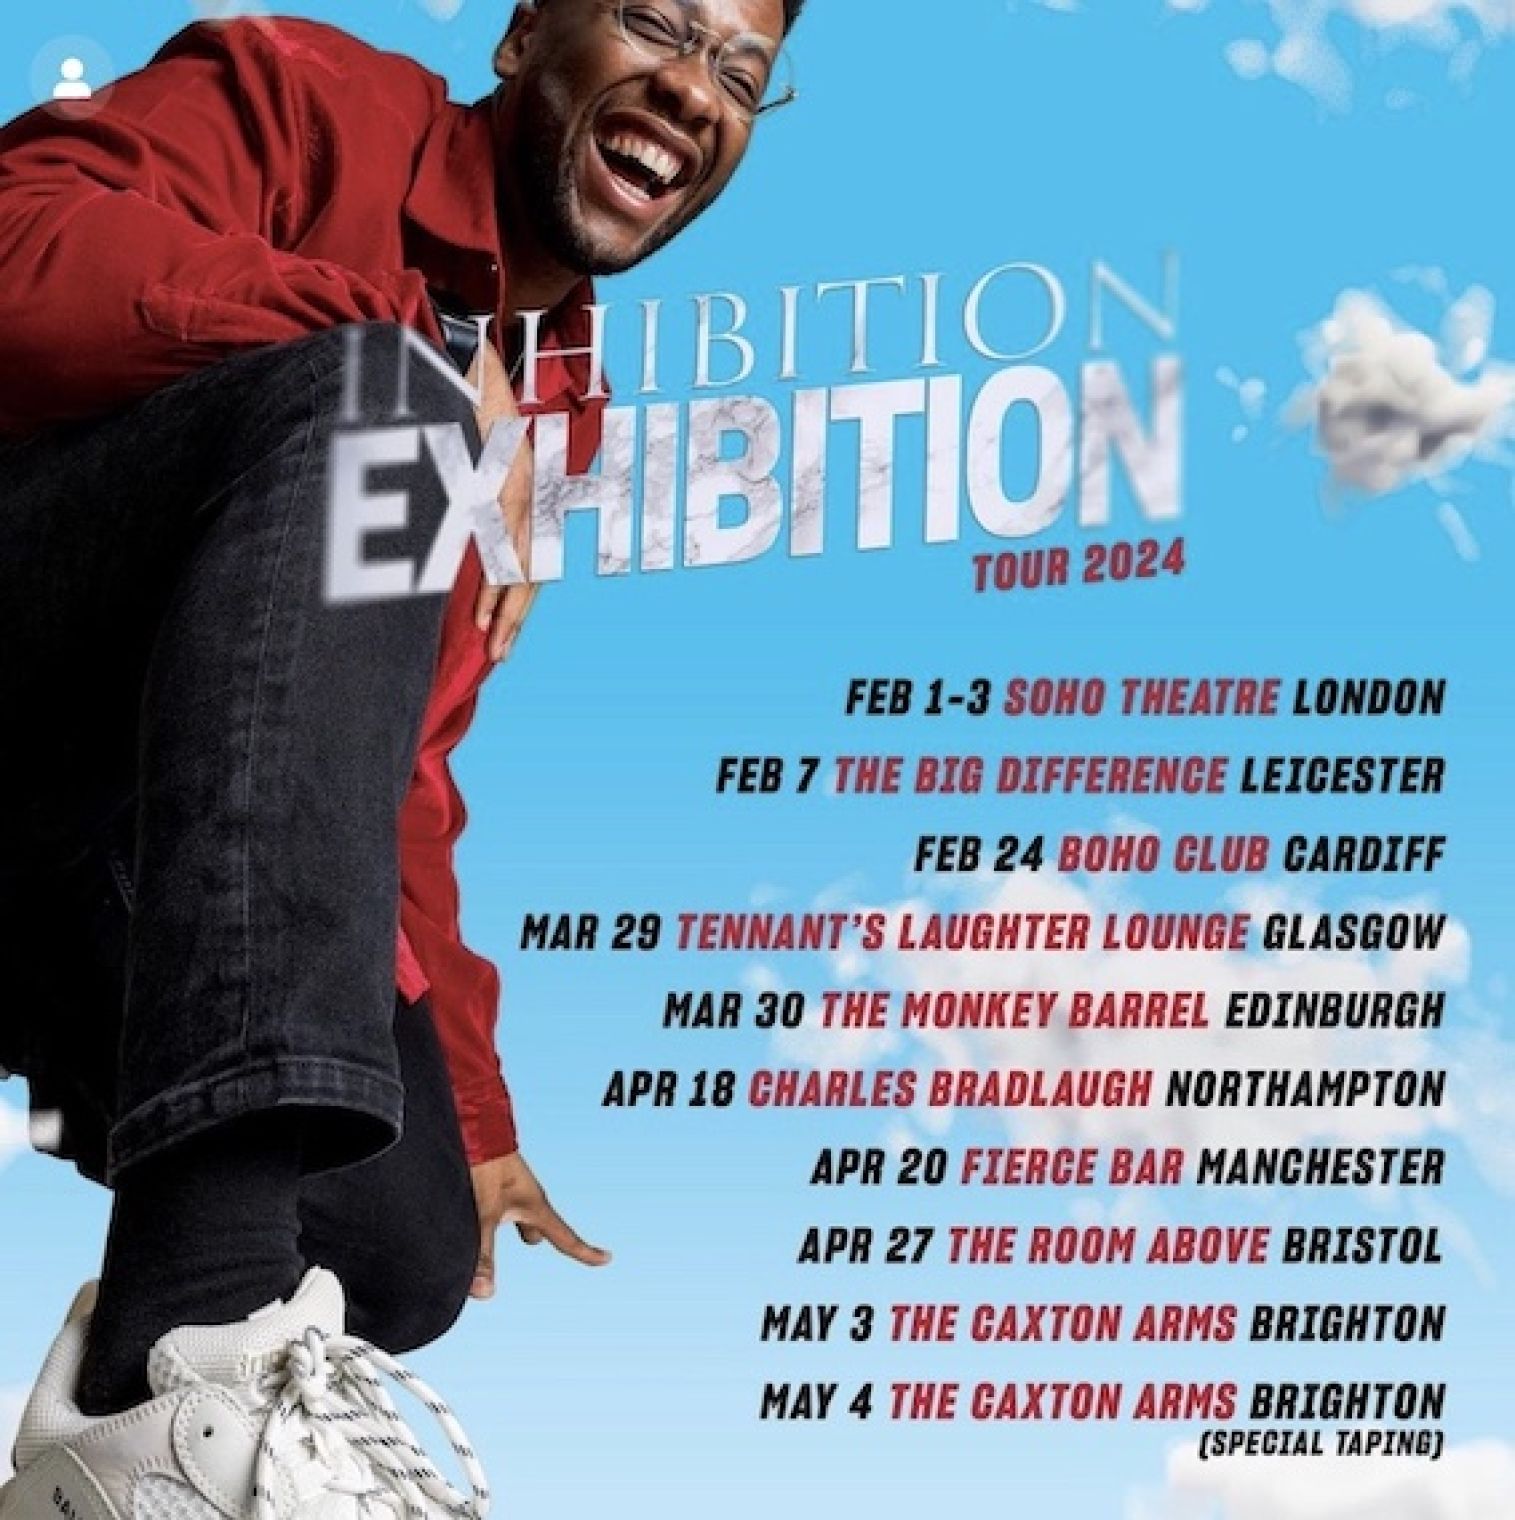 Tadiwa Mahlunge starts the UK tour of his show ‘Inhibition Exhibition’ tonight at London’s Soho Theatre